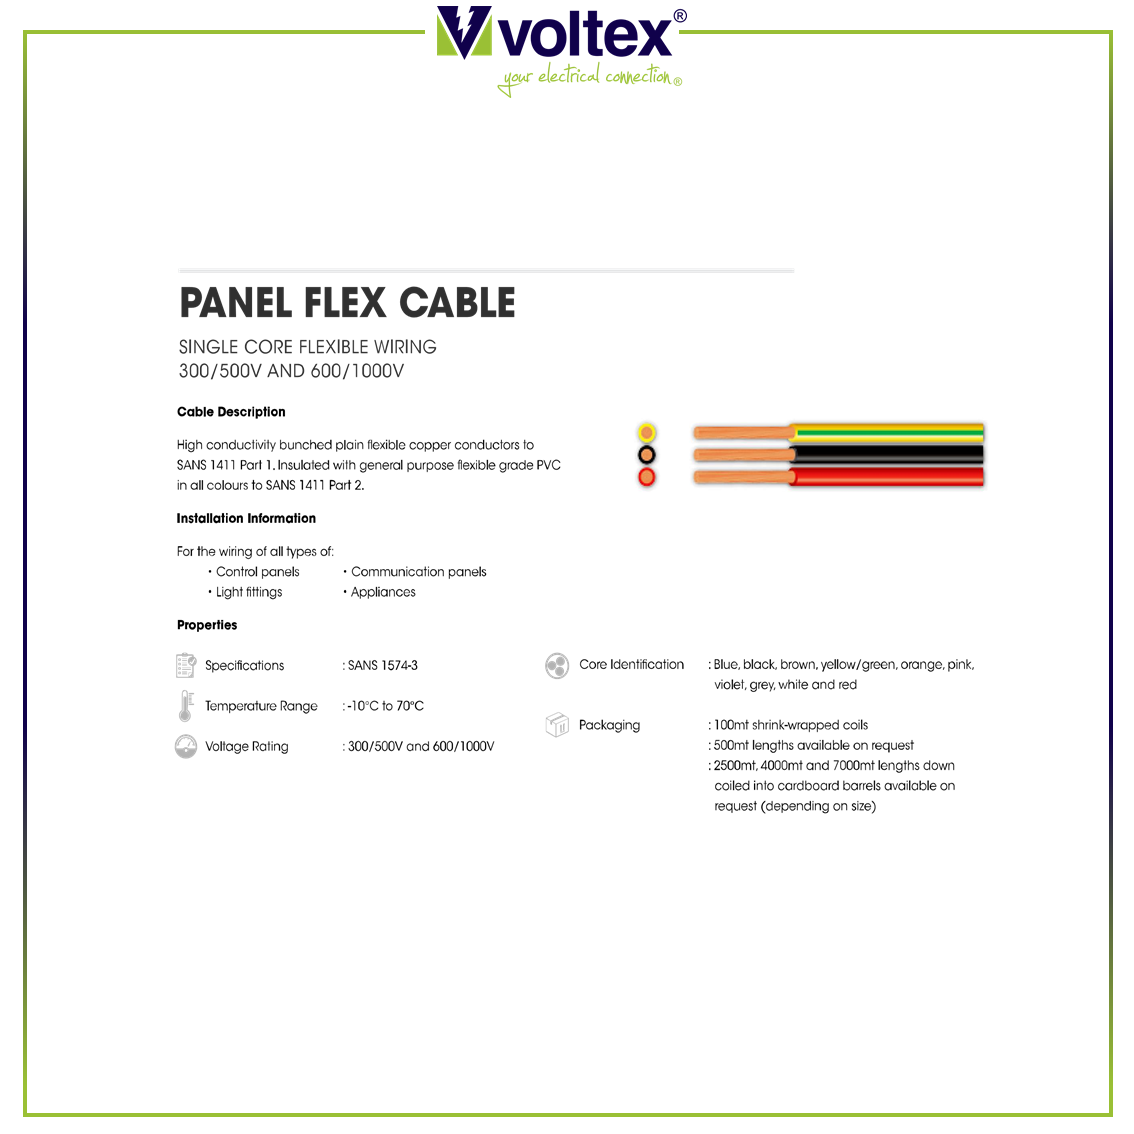 VOLTEX - Panel Flex Cable Catalogue